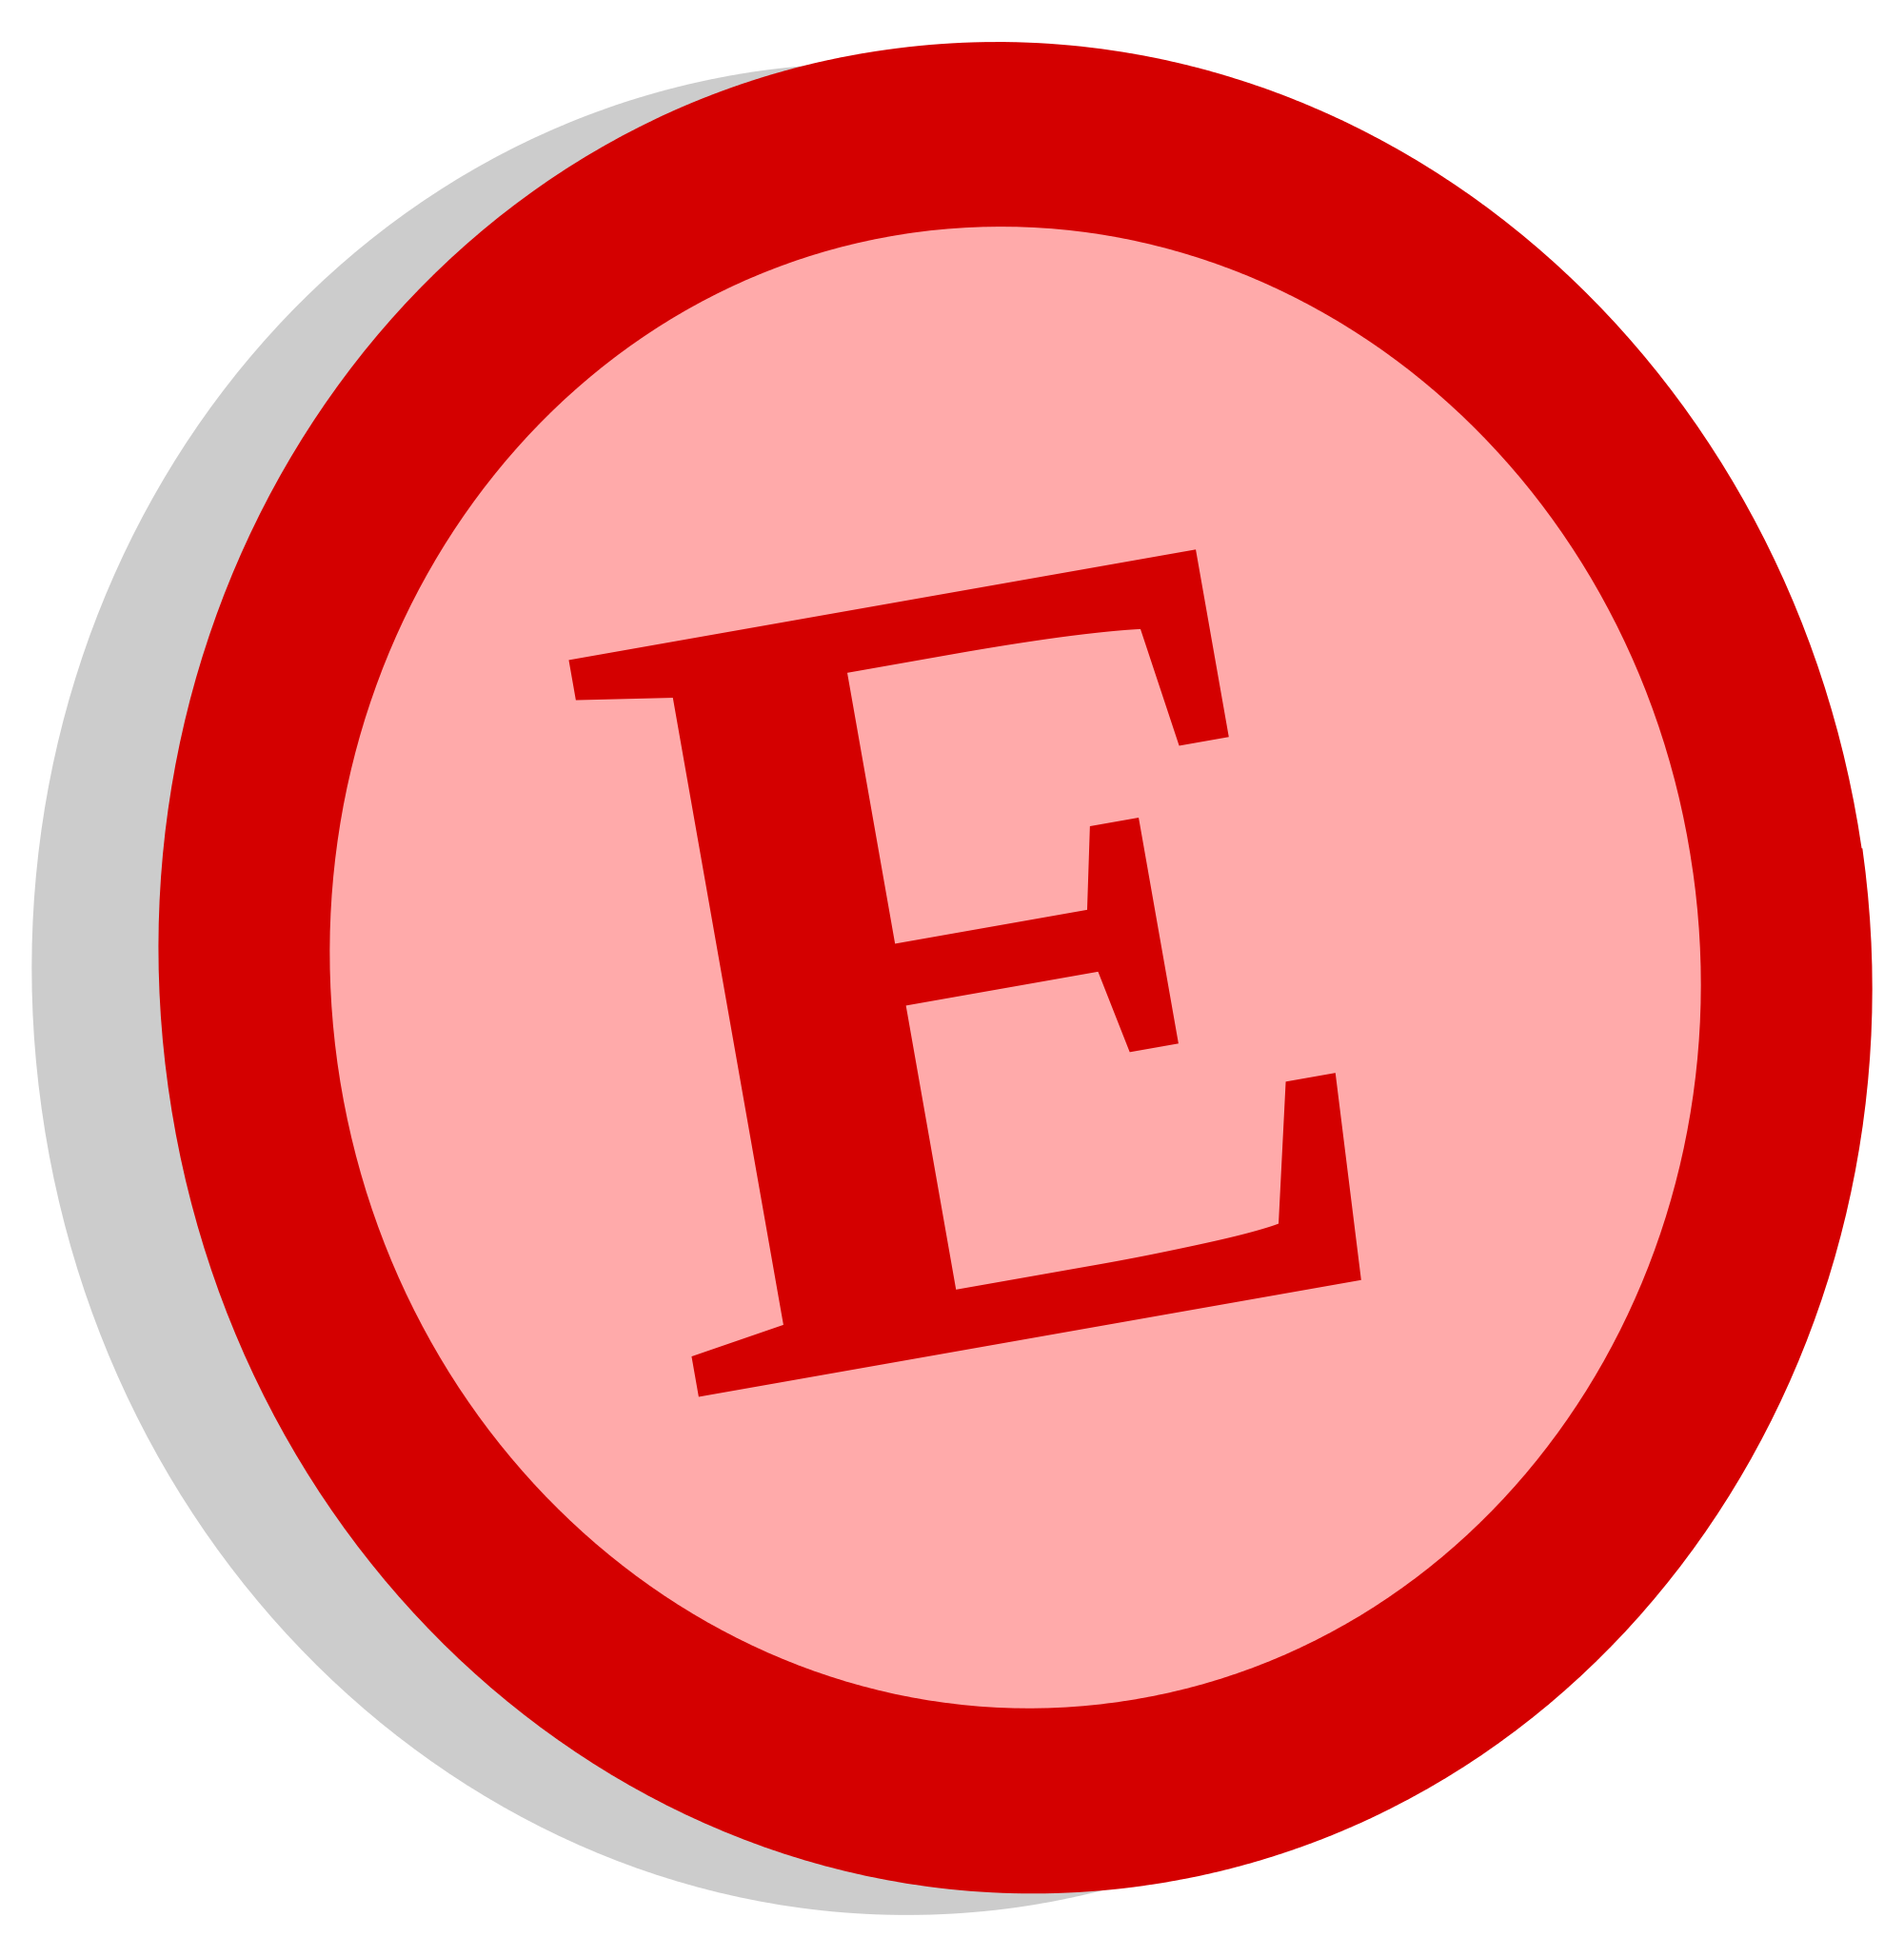 Symbol e | Myanmar Defintition of Symbol e at Shwebook Dictionary Pro